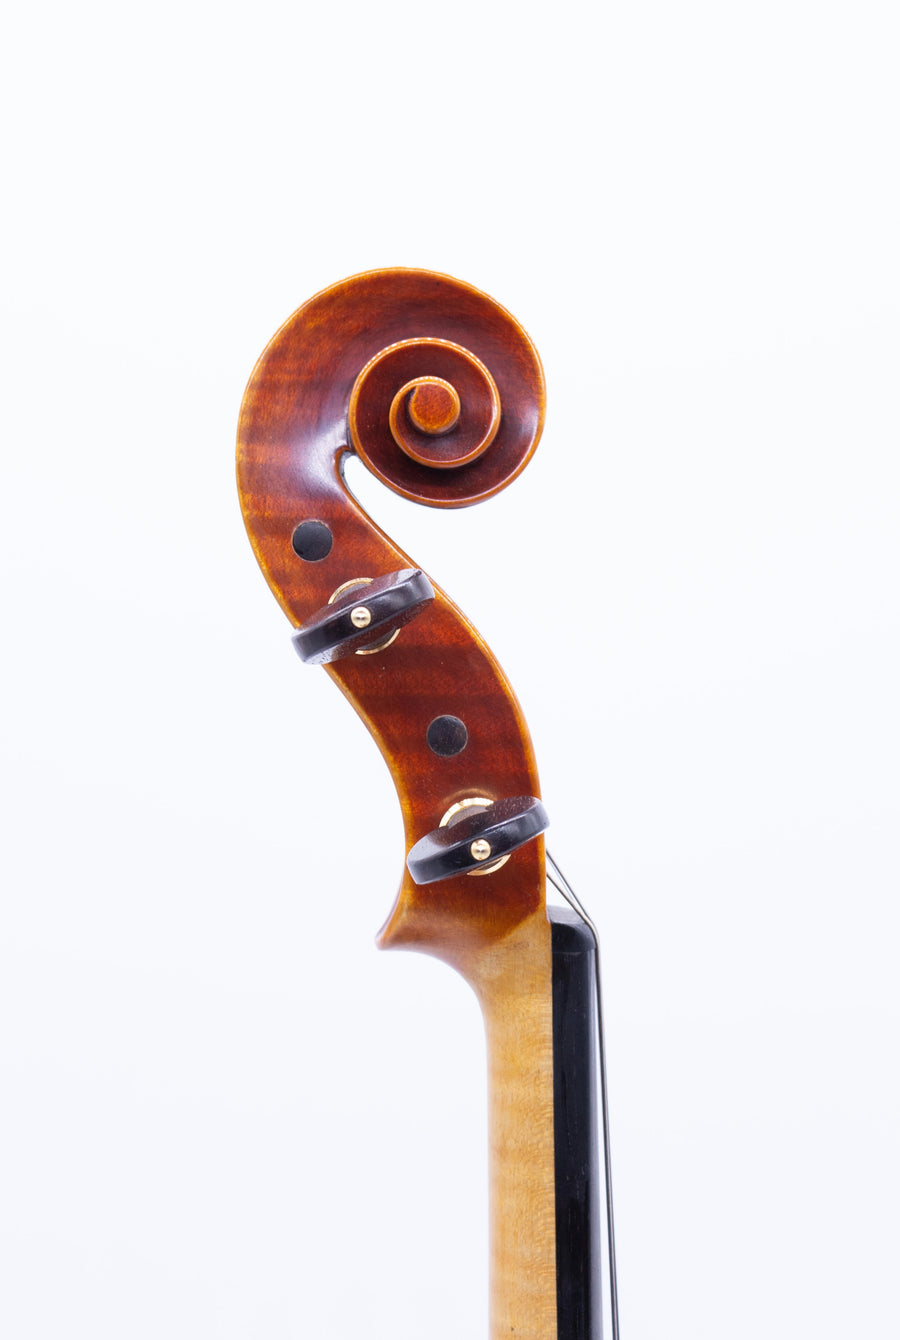 A Bulgarian Violin by Miroslav Tsonev, 1999